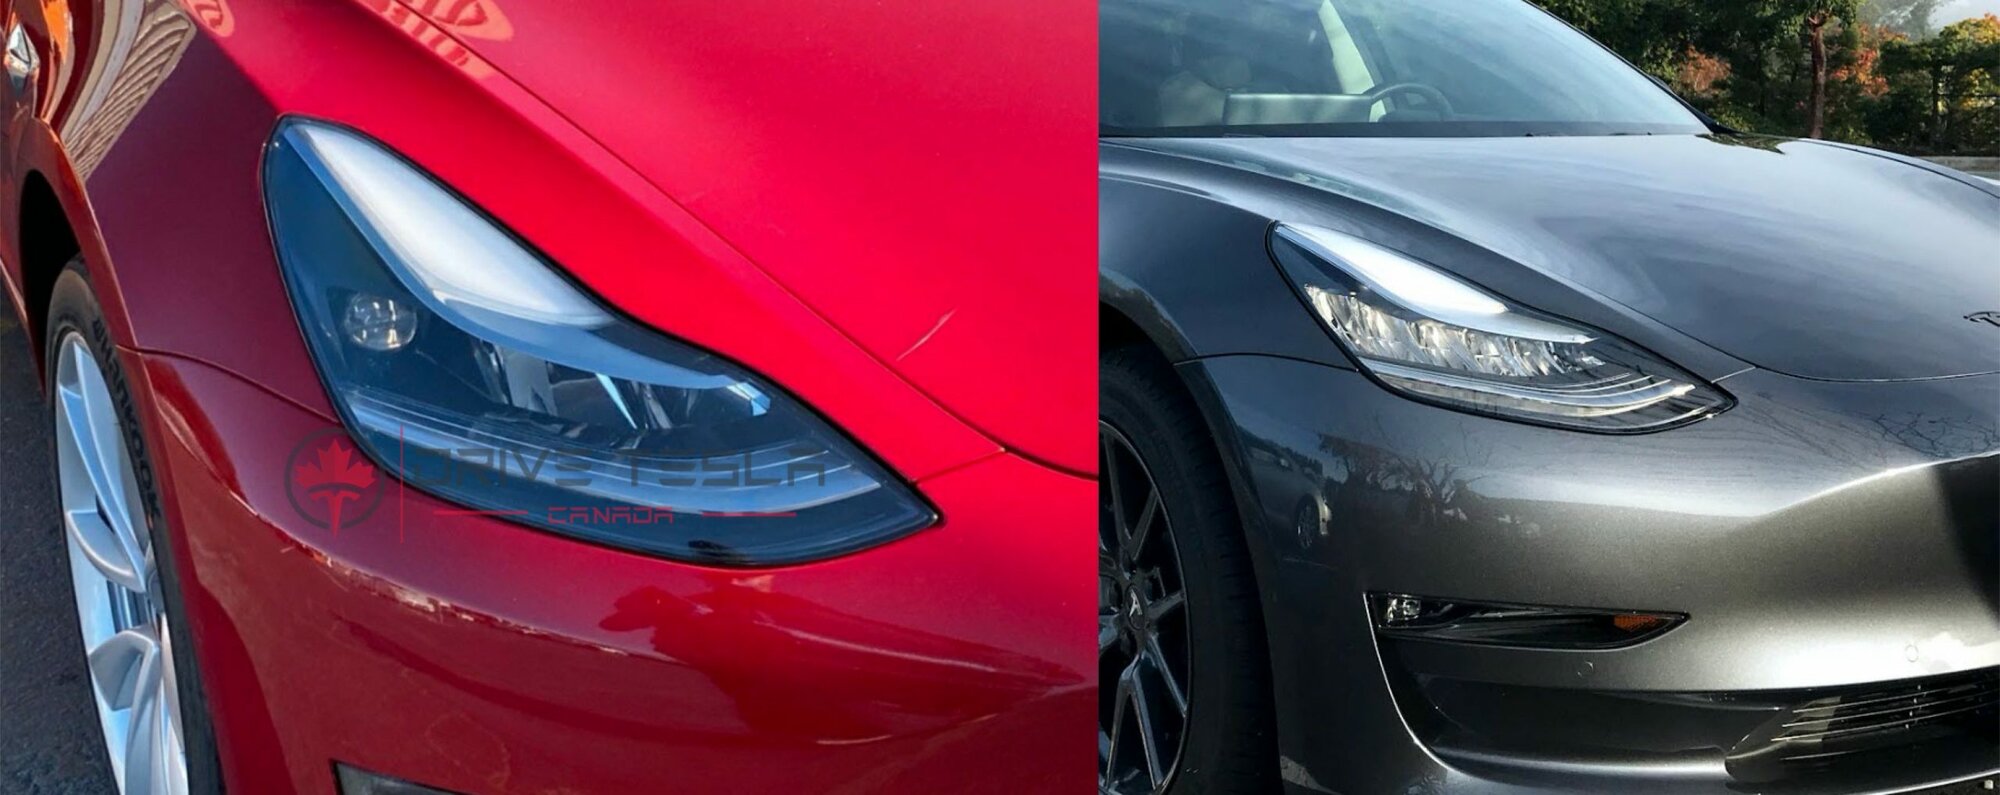 New-vs-old-Tesla-Model-3-headlights-scaled.jpg